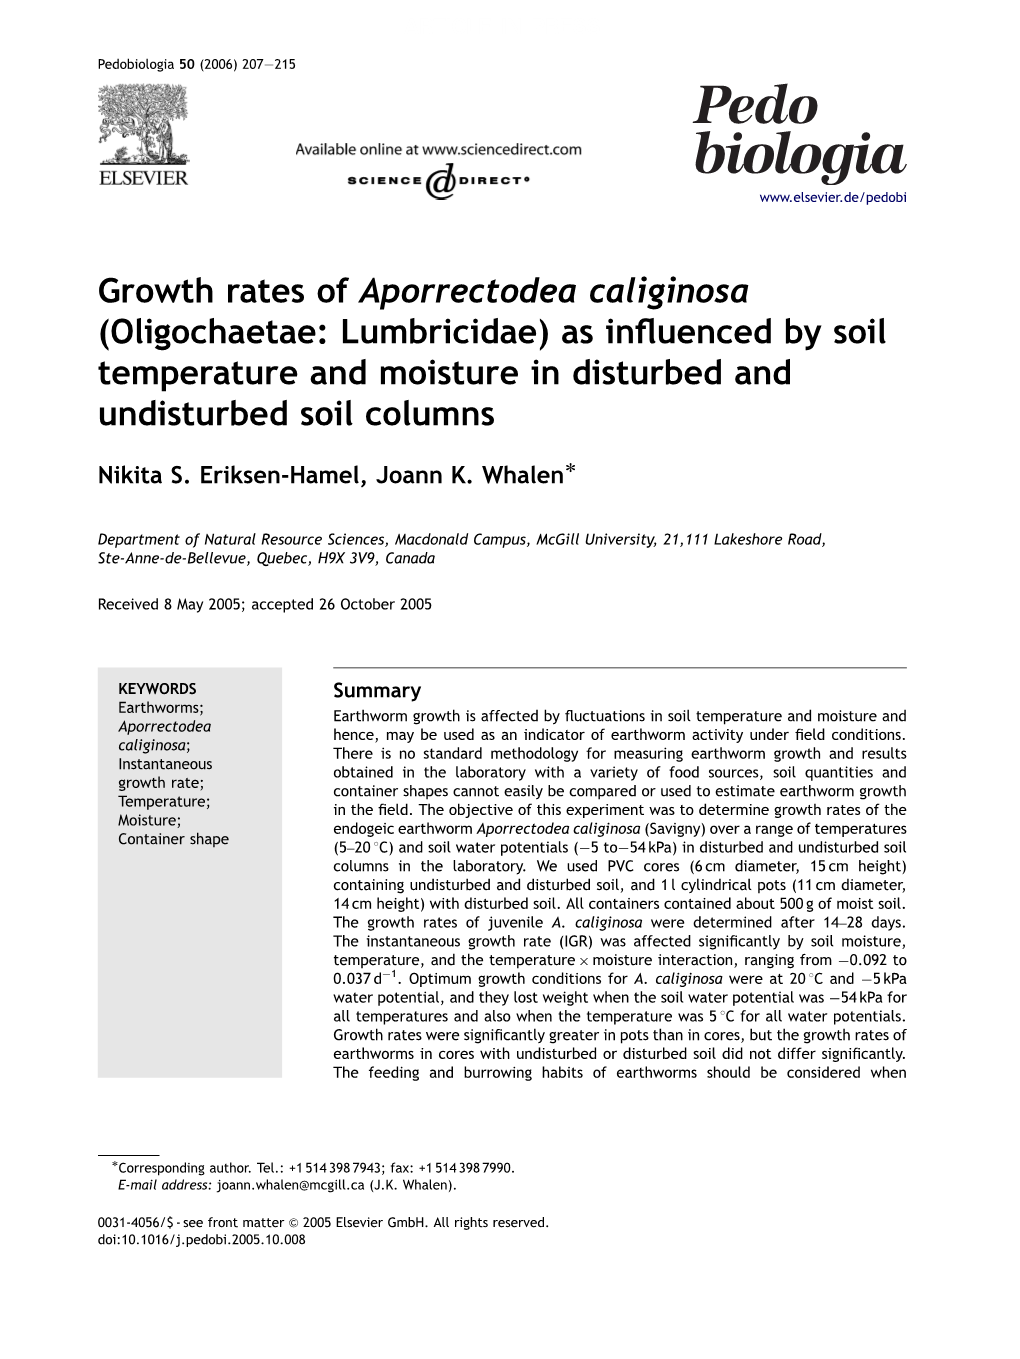 Growth Rates of Aporrectodea Caliginosa (Oligochaetae: Lumbricidae) As Inﬂuenced by Soil Temperature and Moisture in Disturbed and Undisturbed Soil Columns